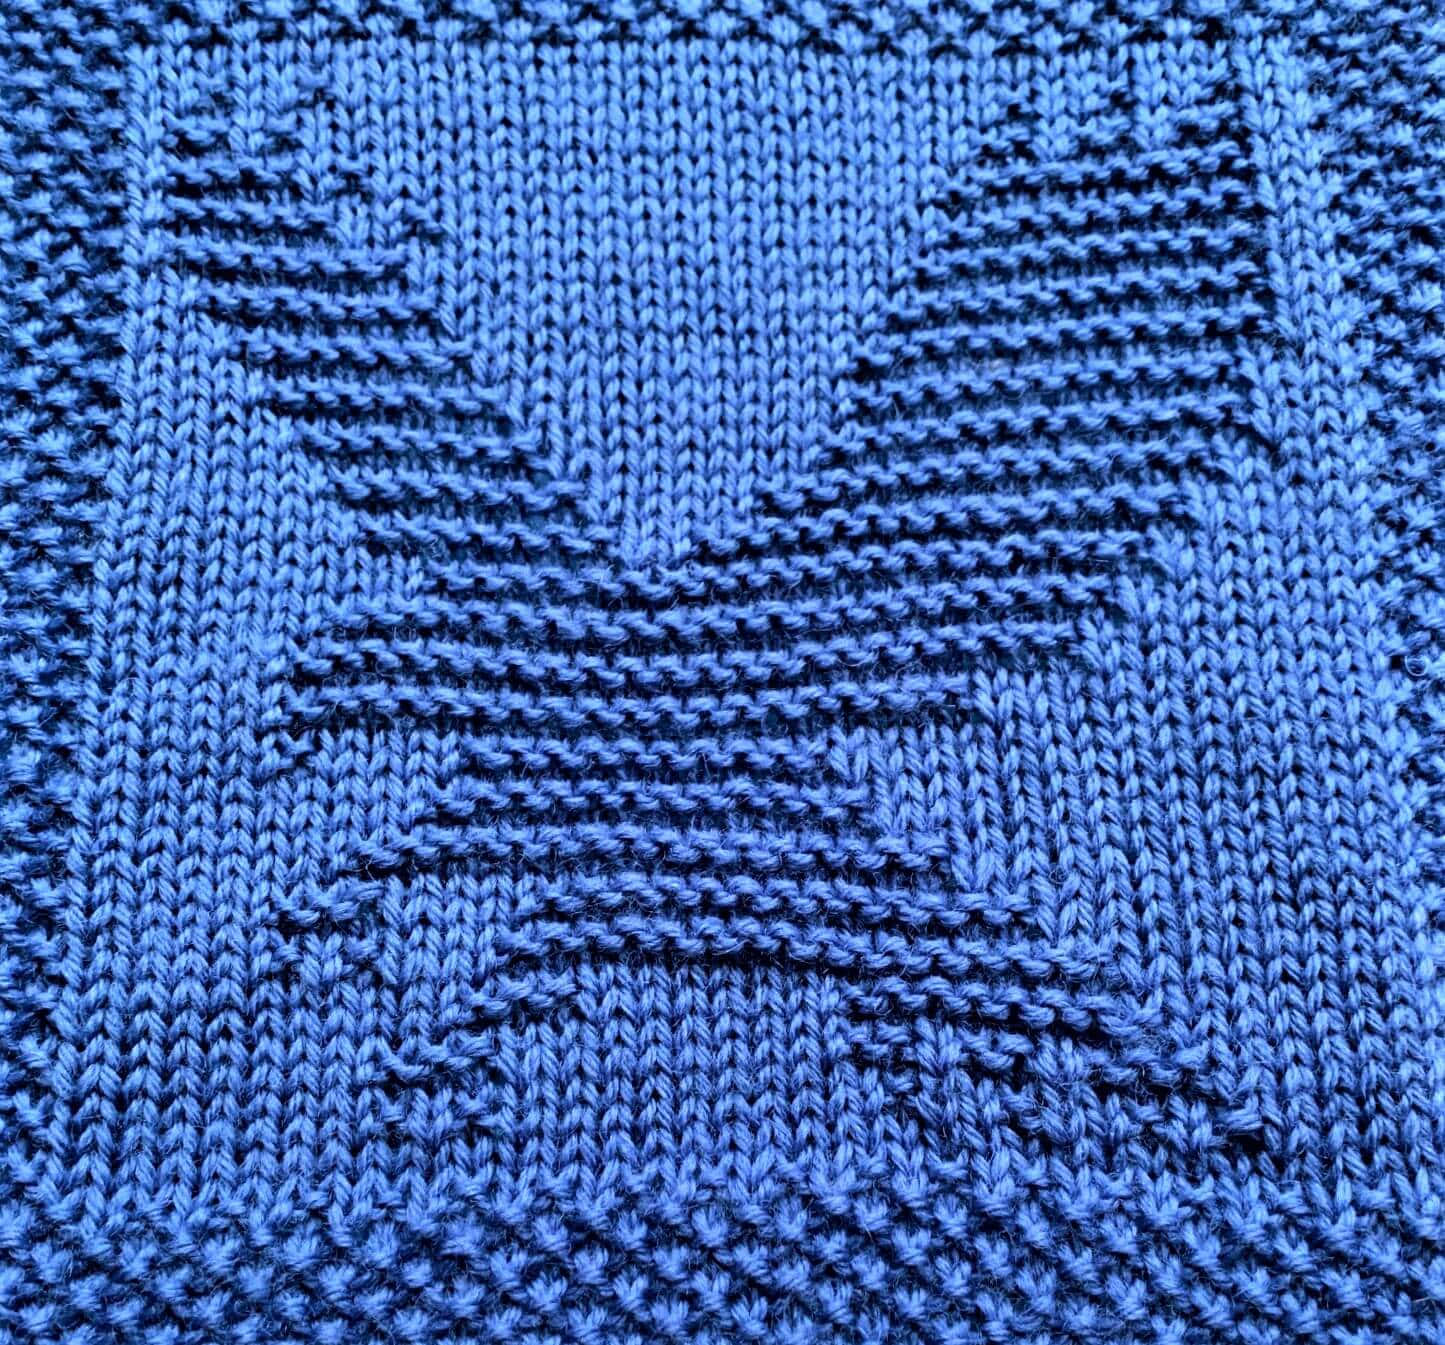 Crocheted Garment Using Blue Knitting Yarn Wallpaper